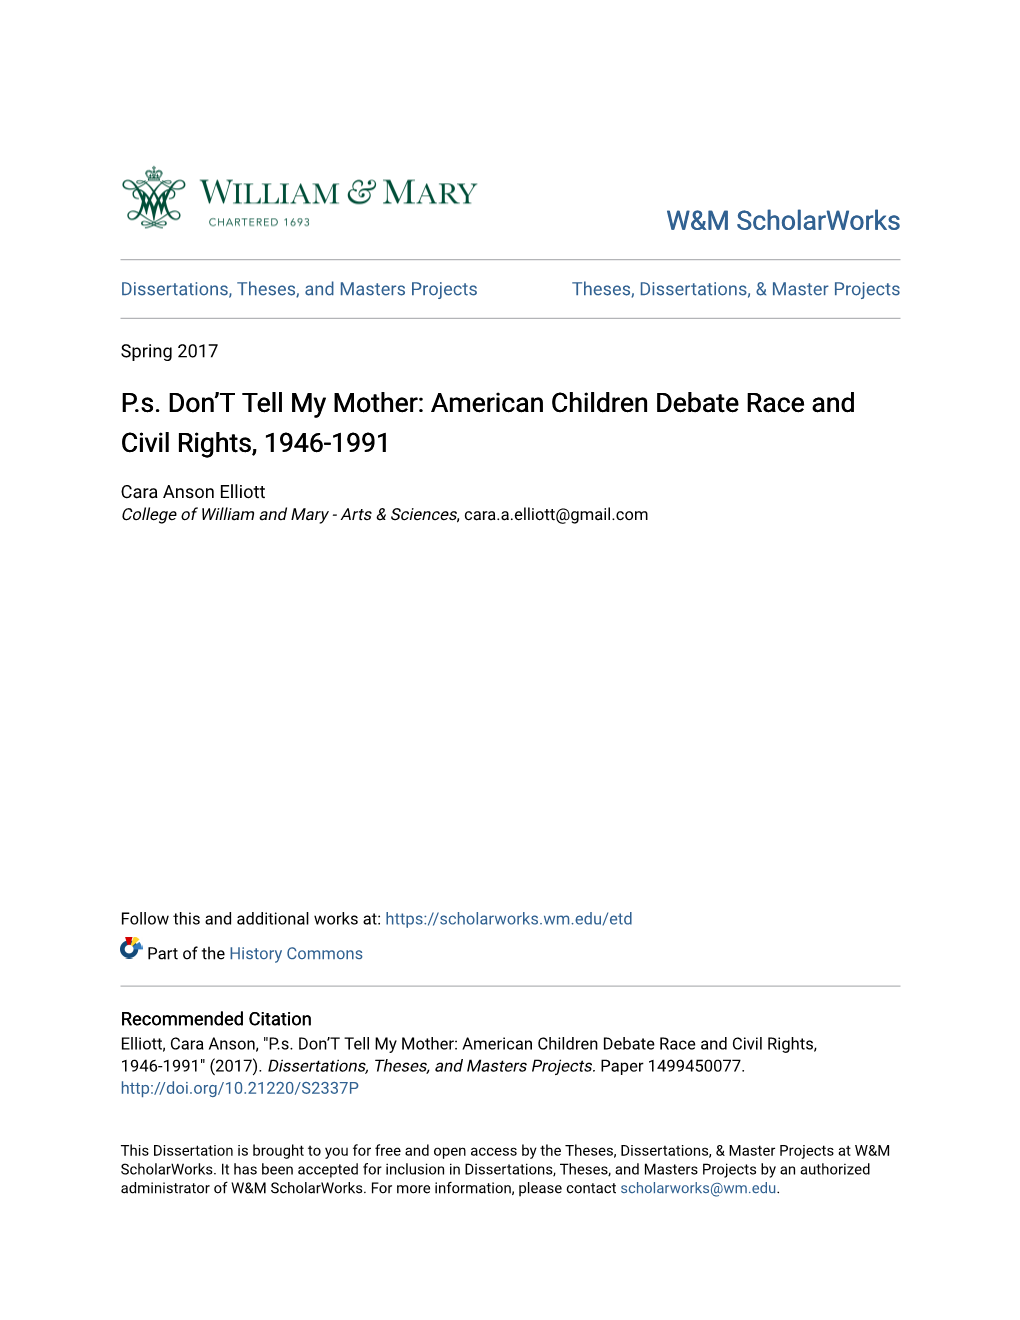 American Children Debate Race and Civil Rights, 1946-1991